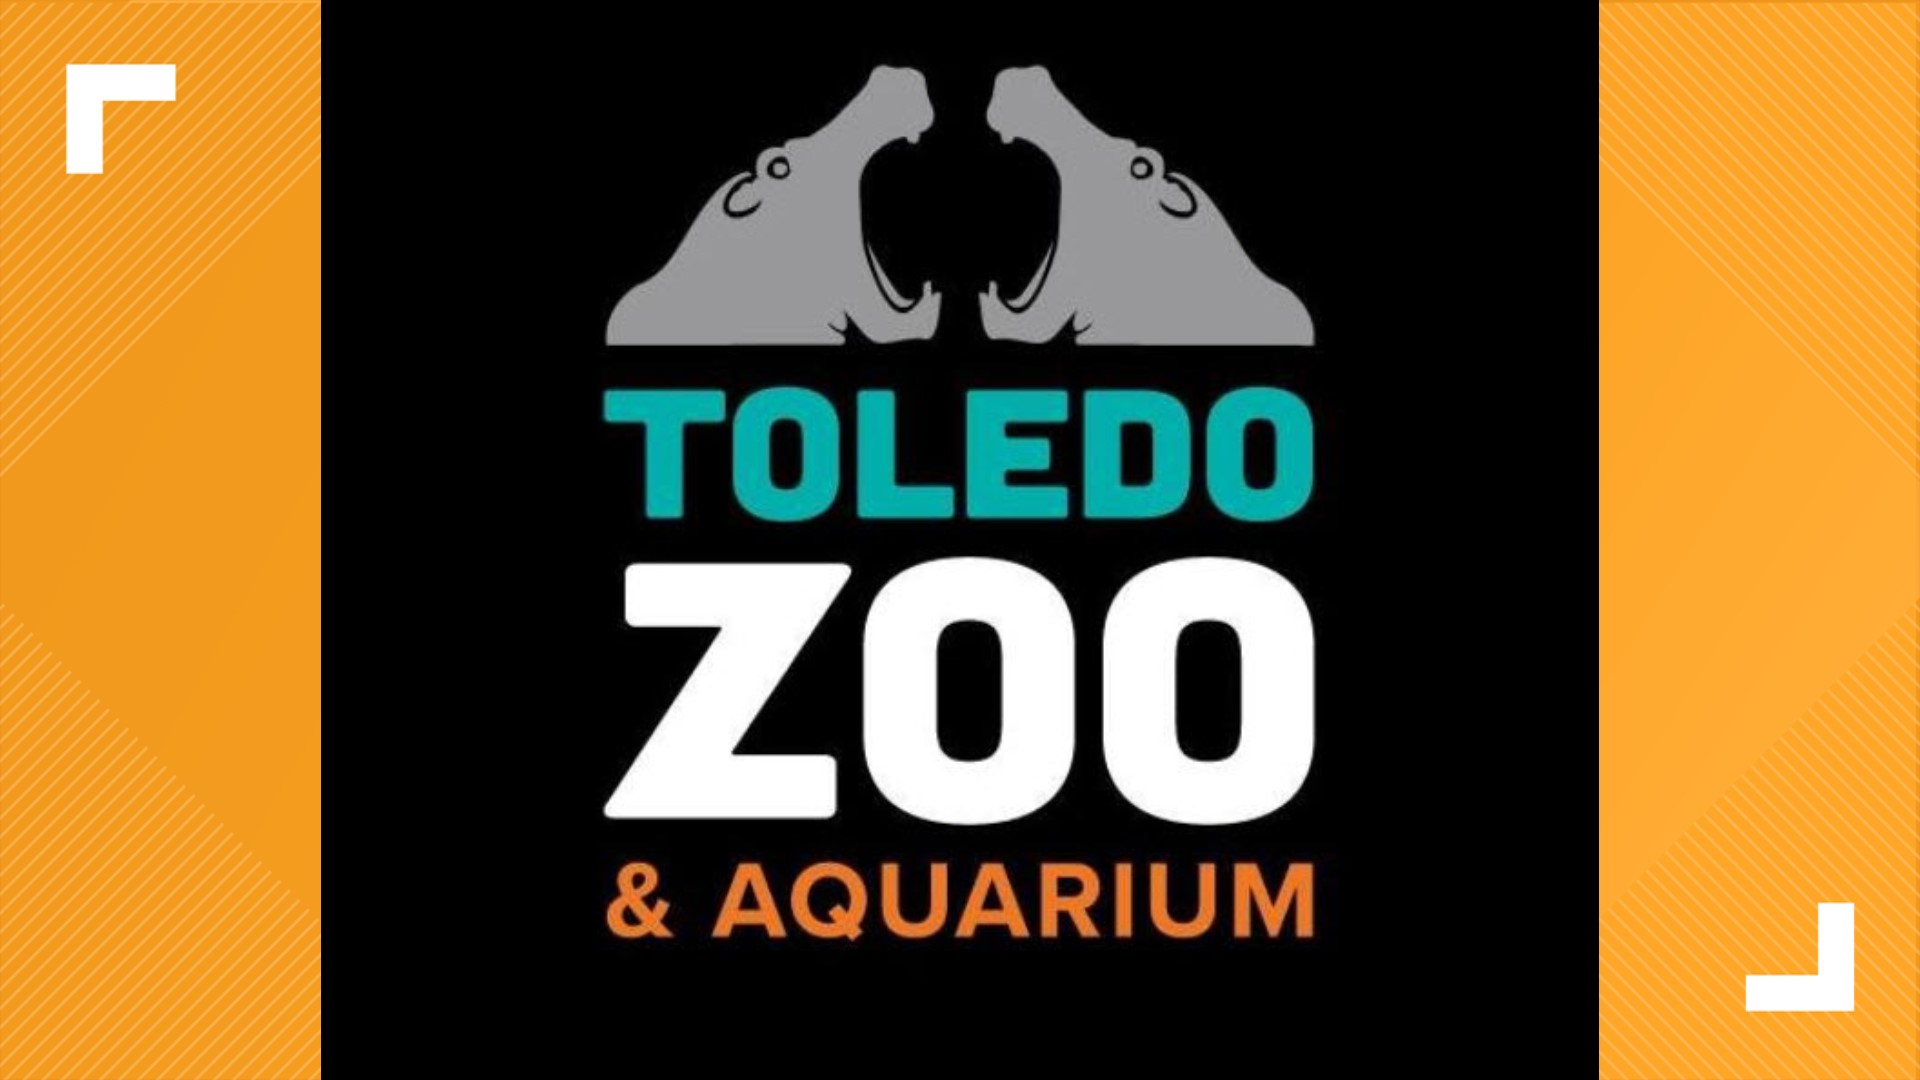 Toledo Zoo offering halfoff admission coupon online